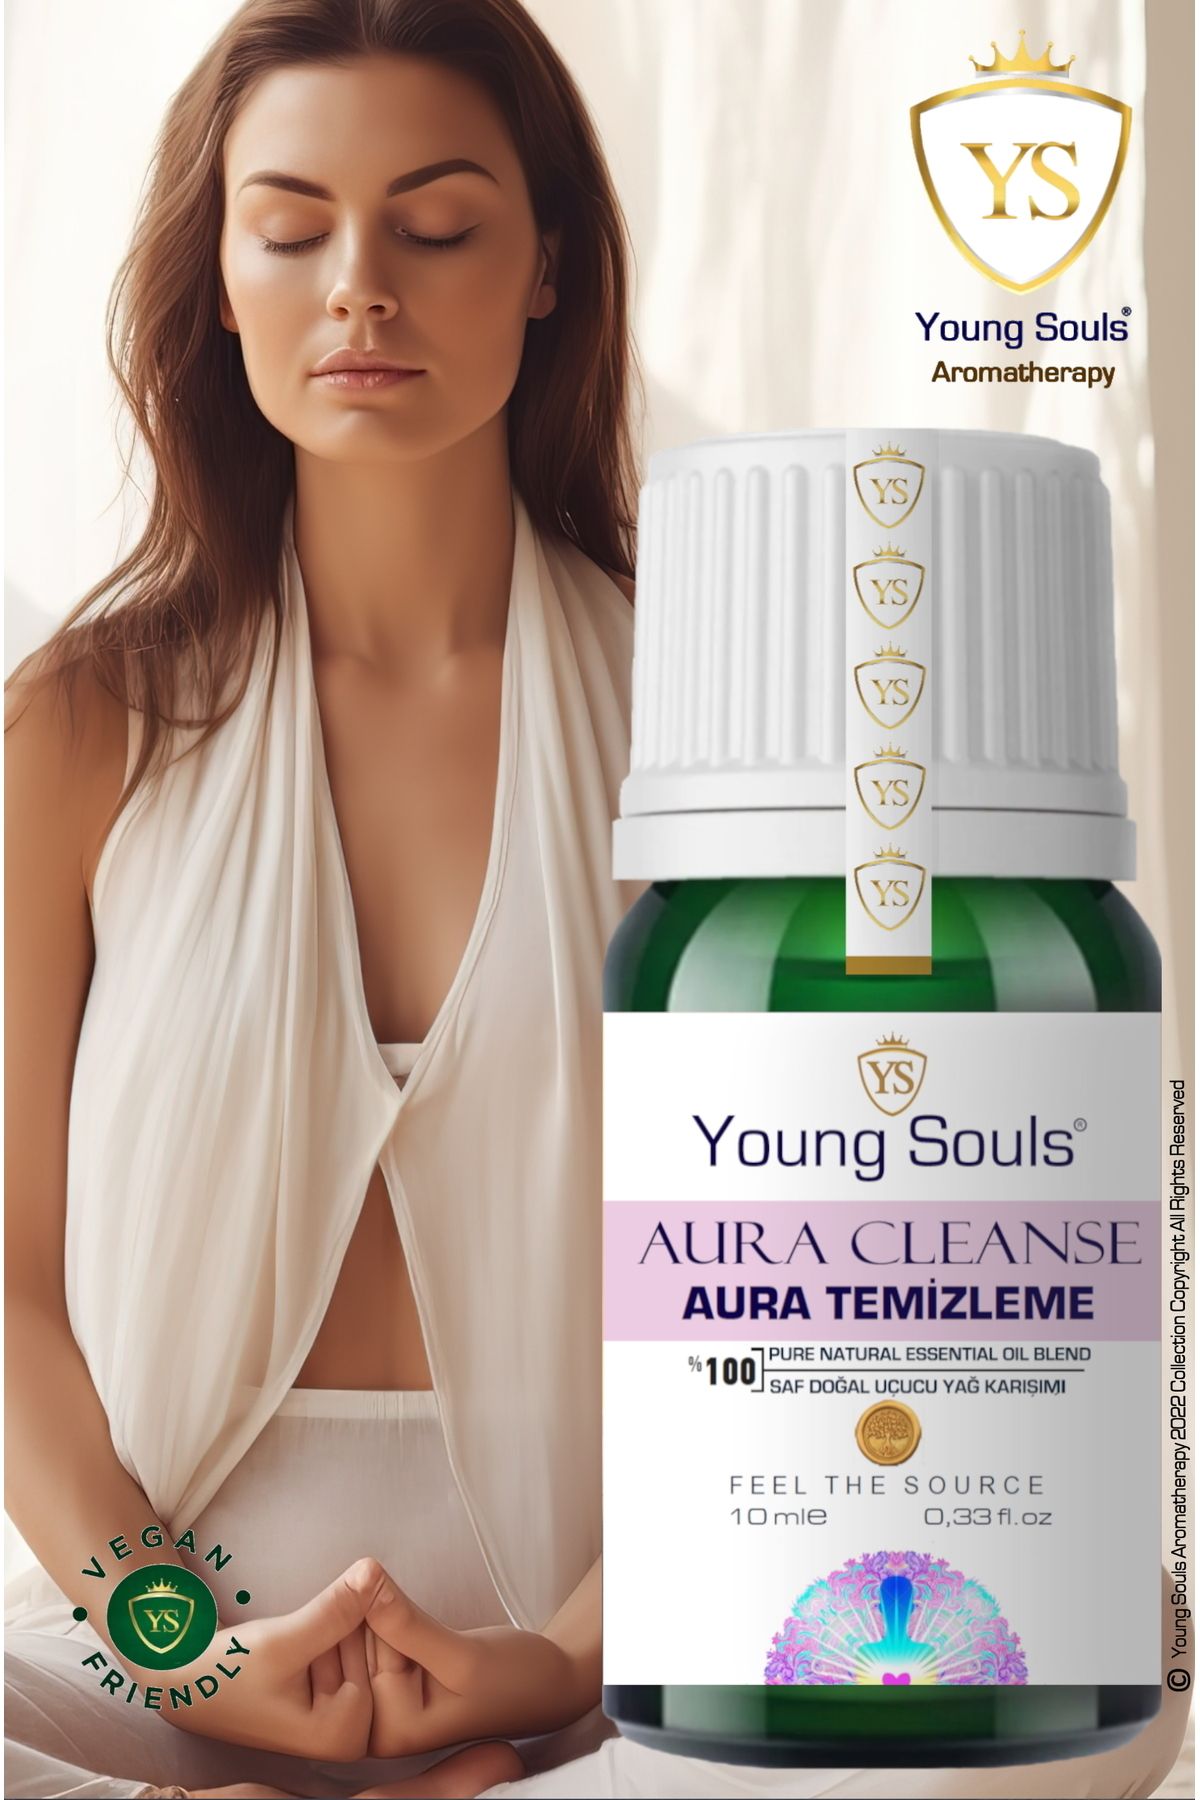 YOUNG SOULS Aromatherapy Aura Cleanse Essential Oil Blend Aura Temizleme Uçucu Yağ Karışımı 10 Ml